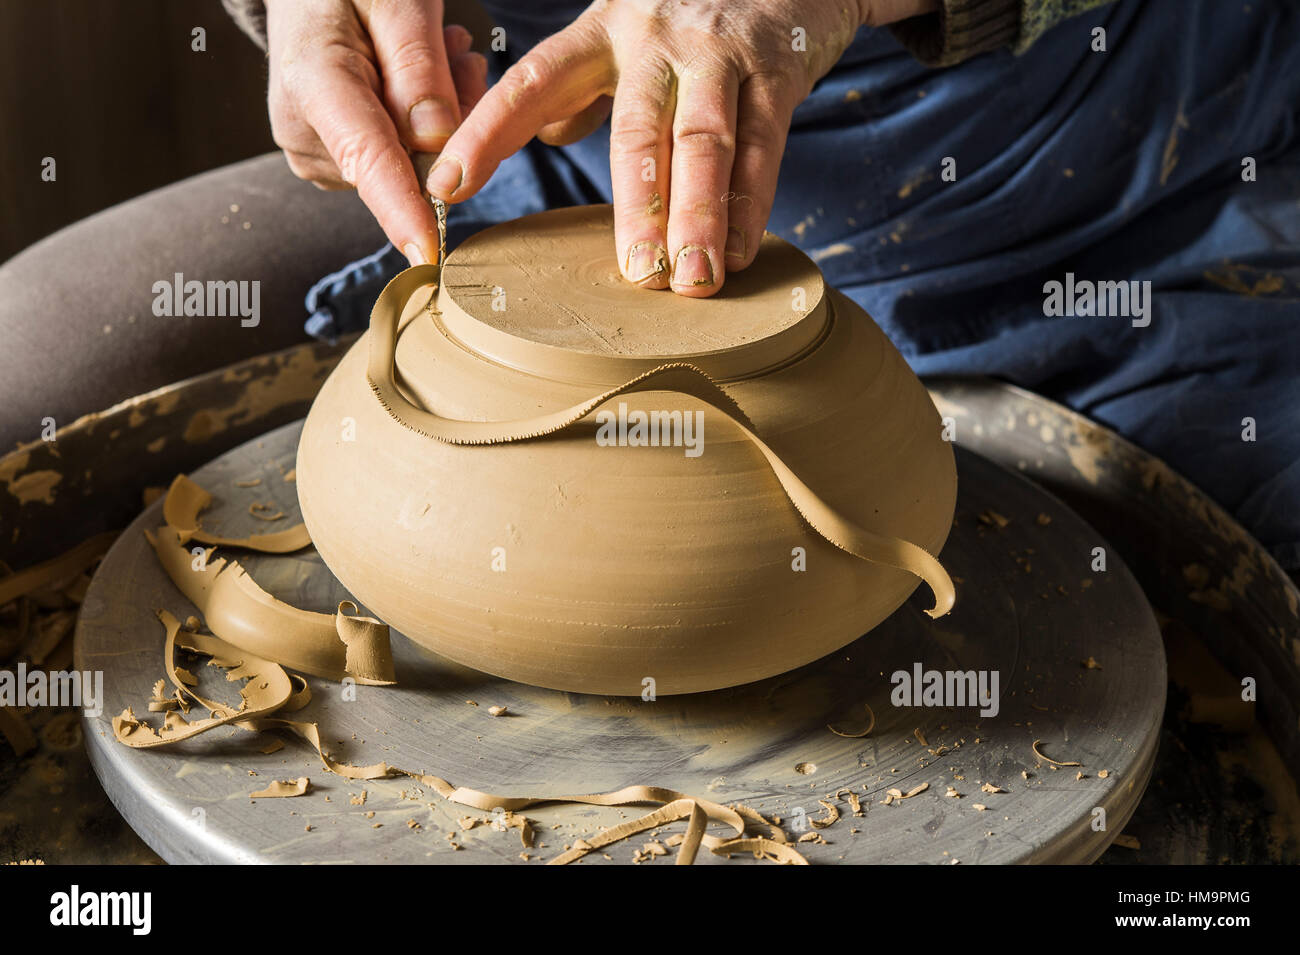 Ceramic workshop, hands shape bottom of pot on pottery wheel, Pittenhart, Upper Bavaria, Germany Stock Photo